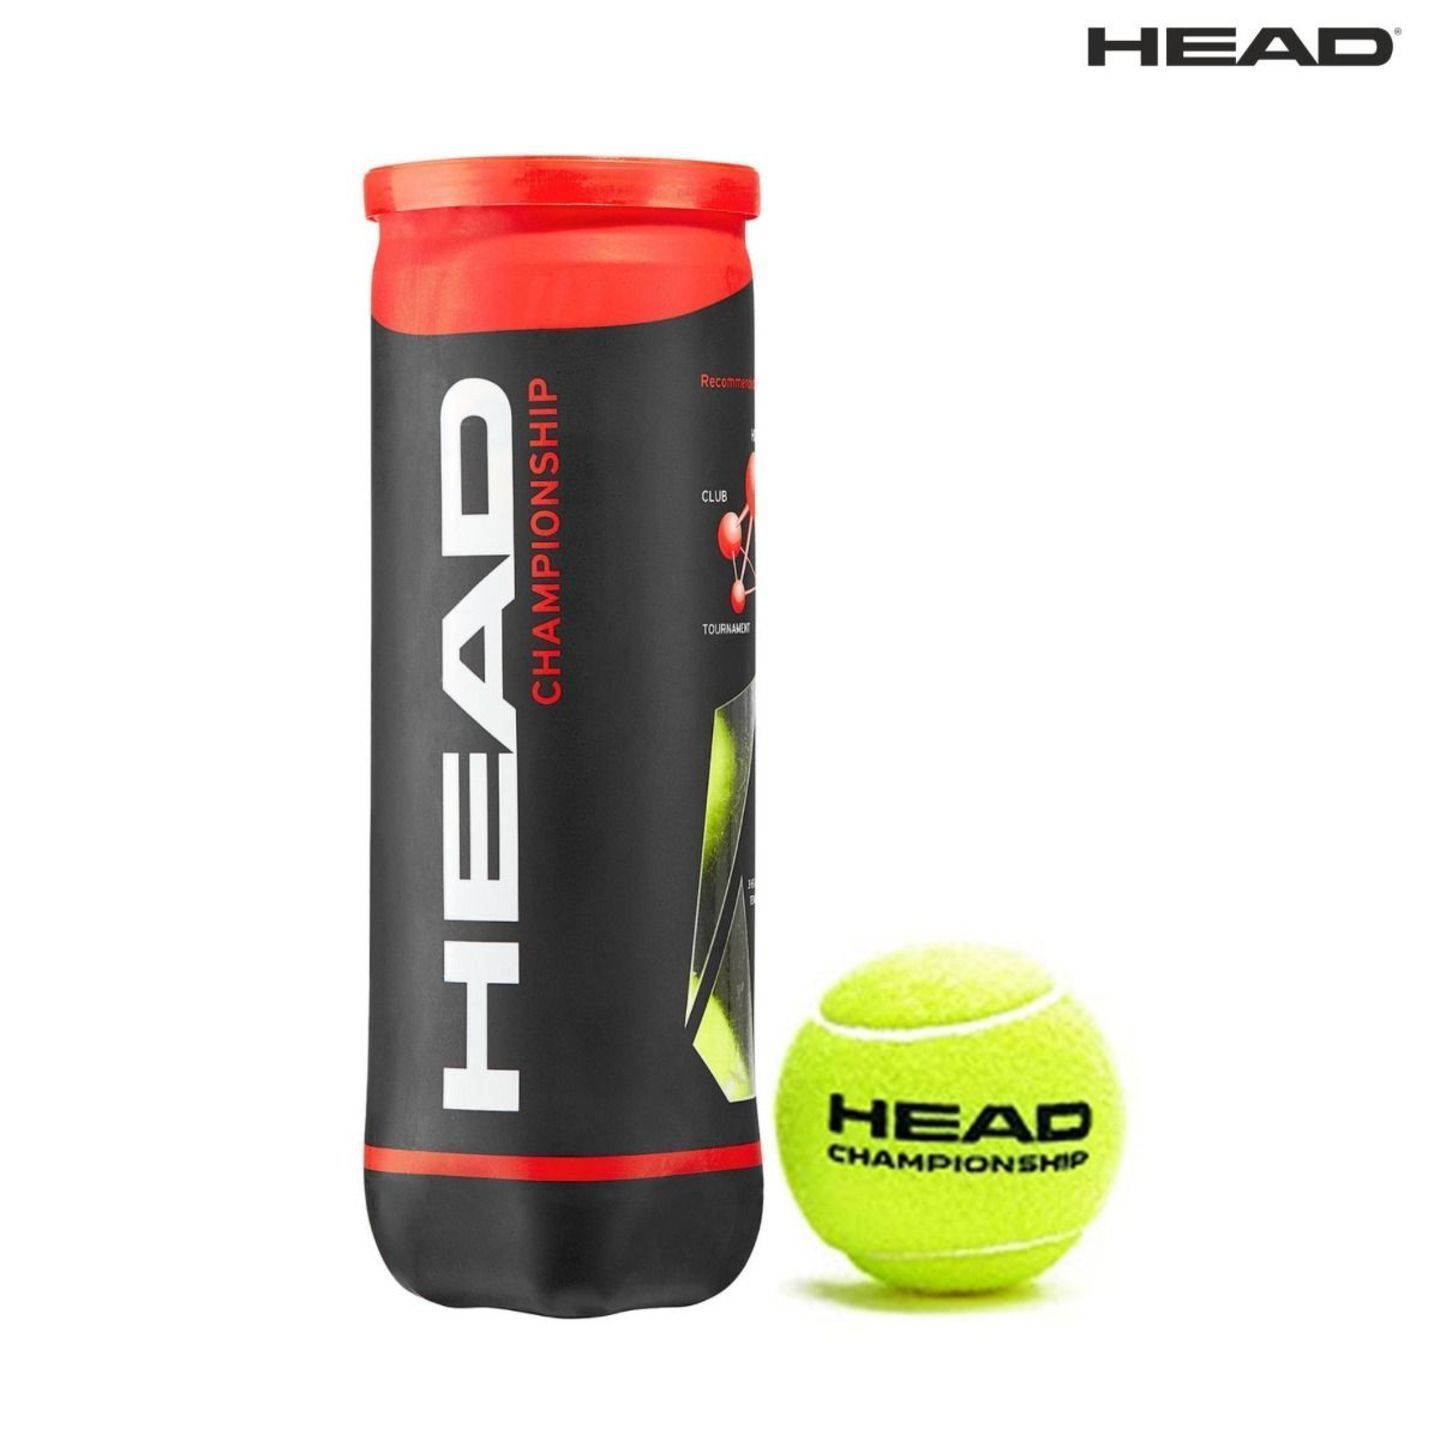 HEAD CHAMPIONSHIP TENNIS BALL